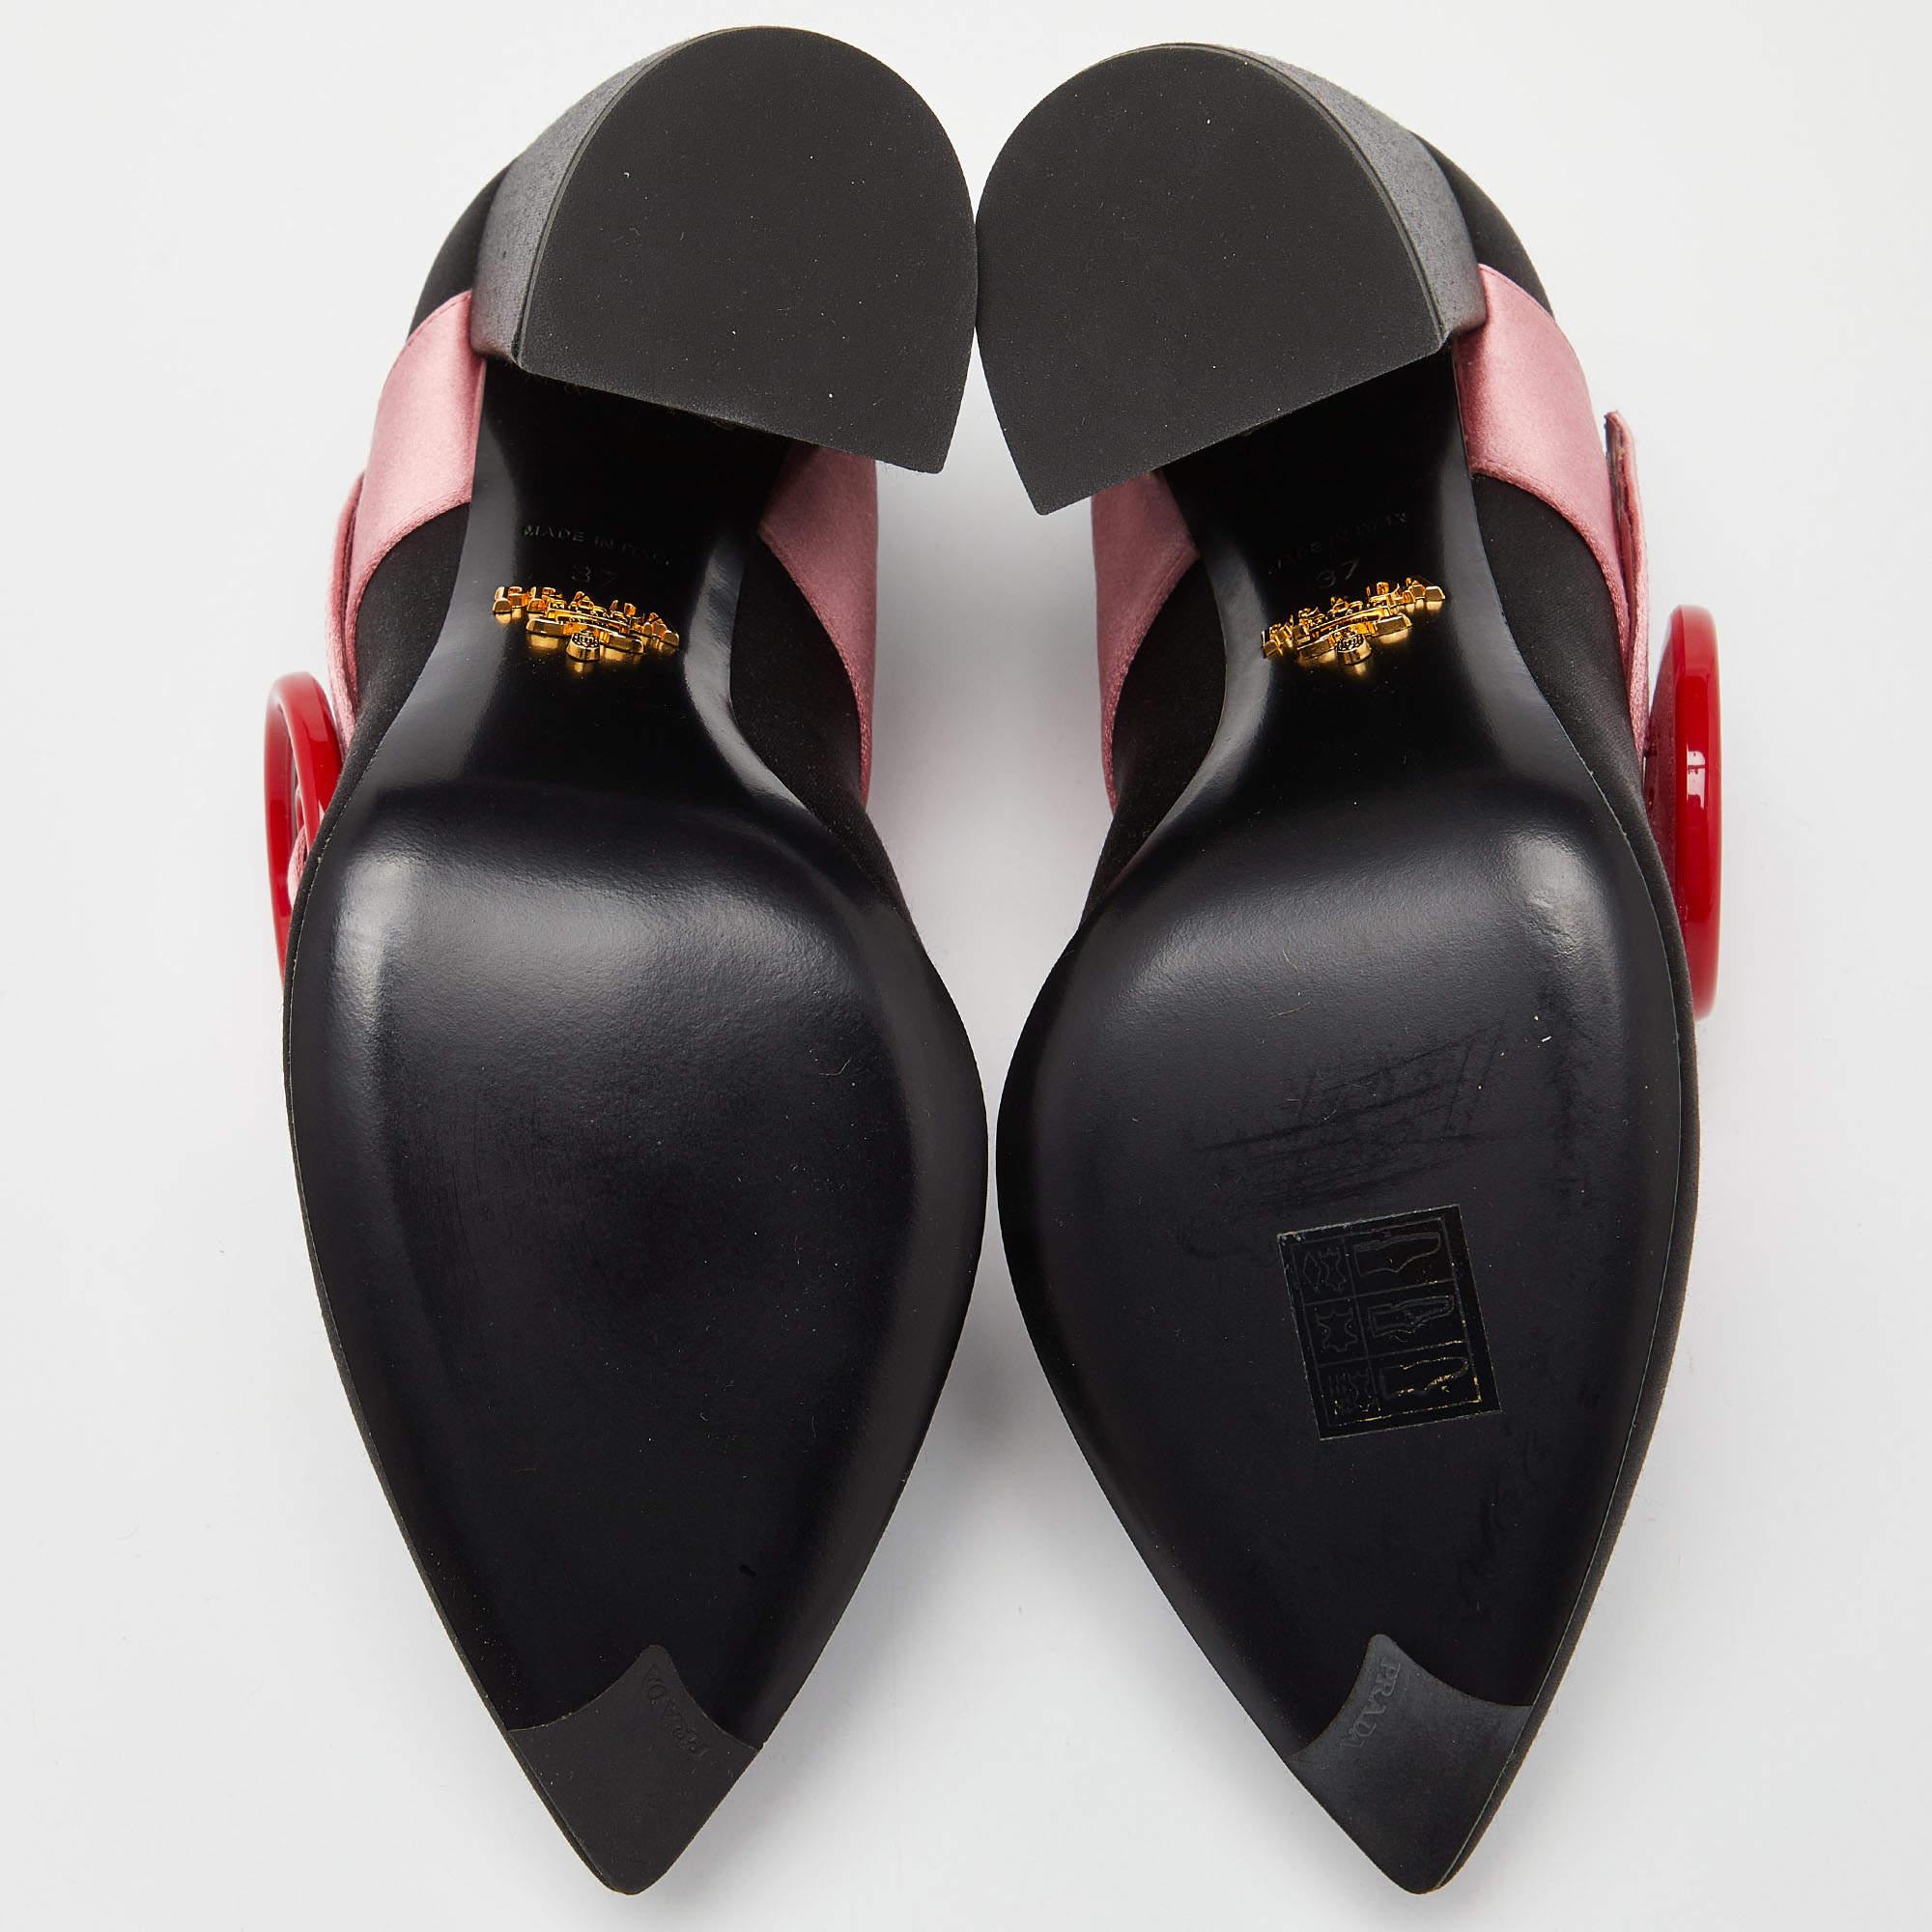 Prada Black/Pink Satin Button Details Block Heel Pumps Size 37 3